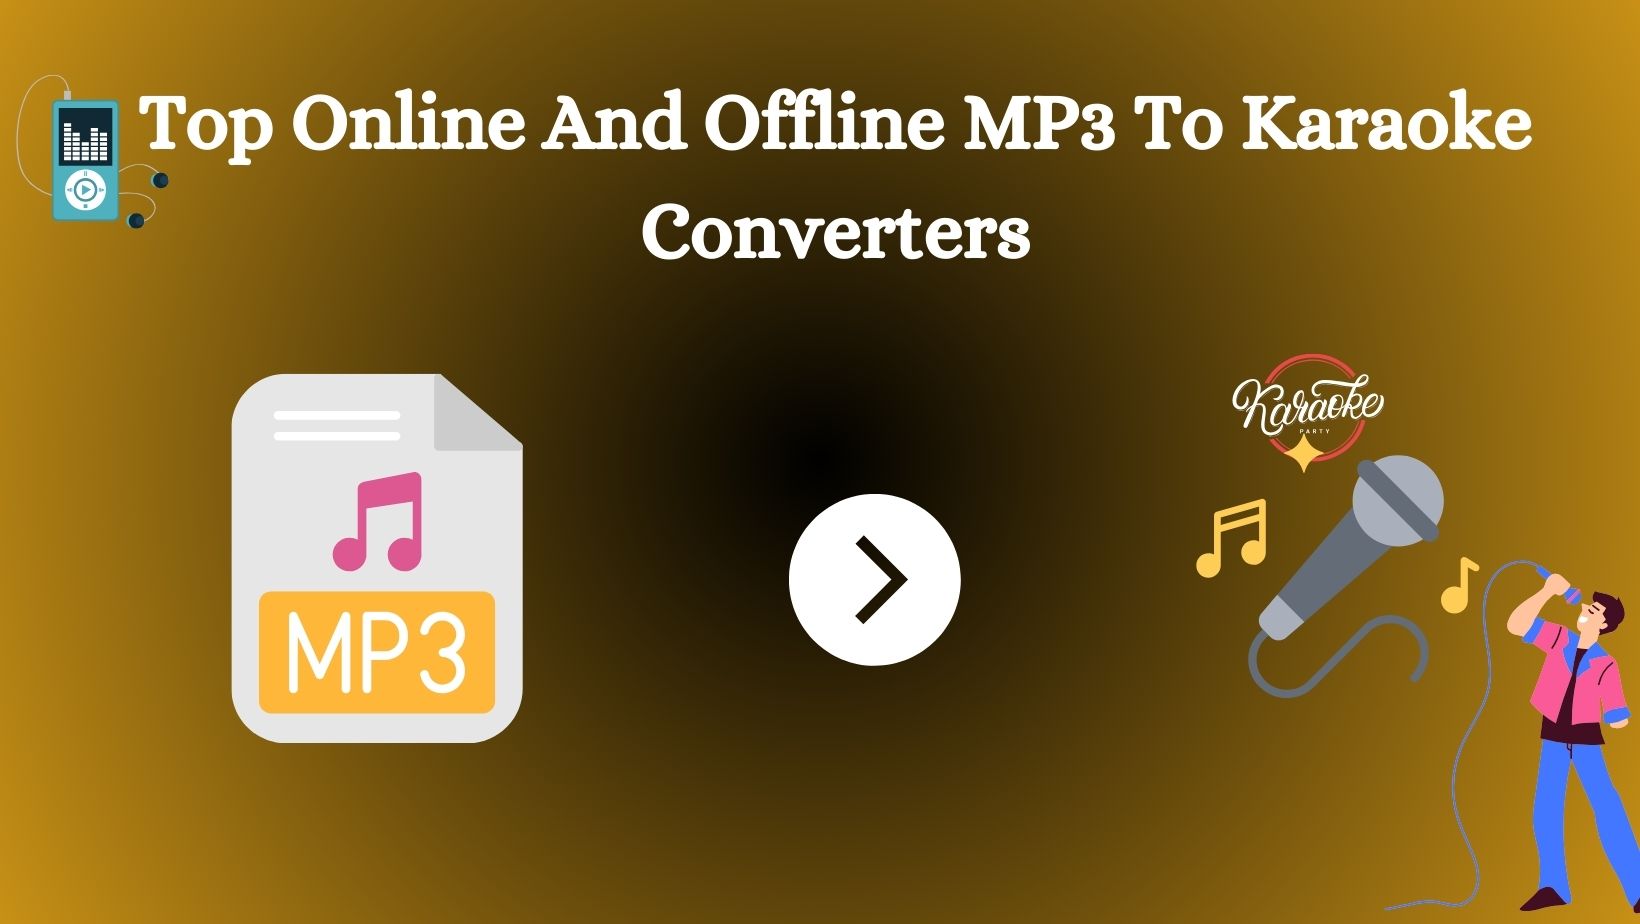 mp3 to karaoke converters